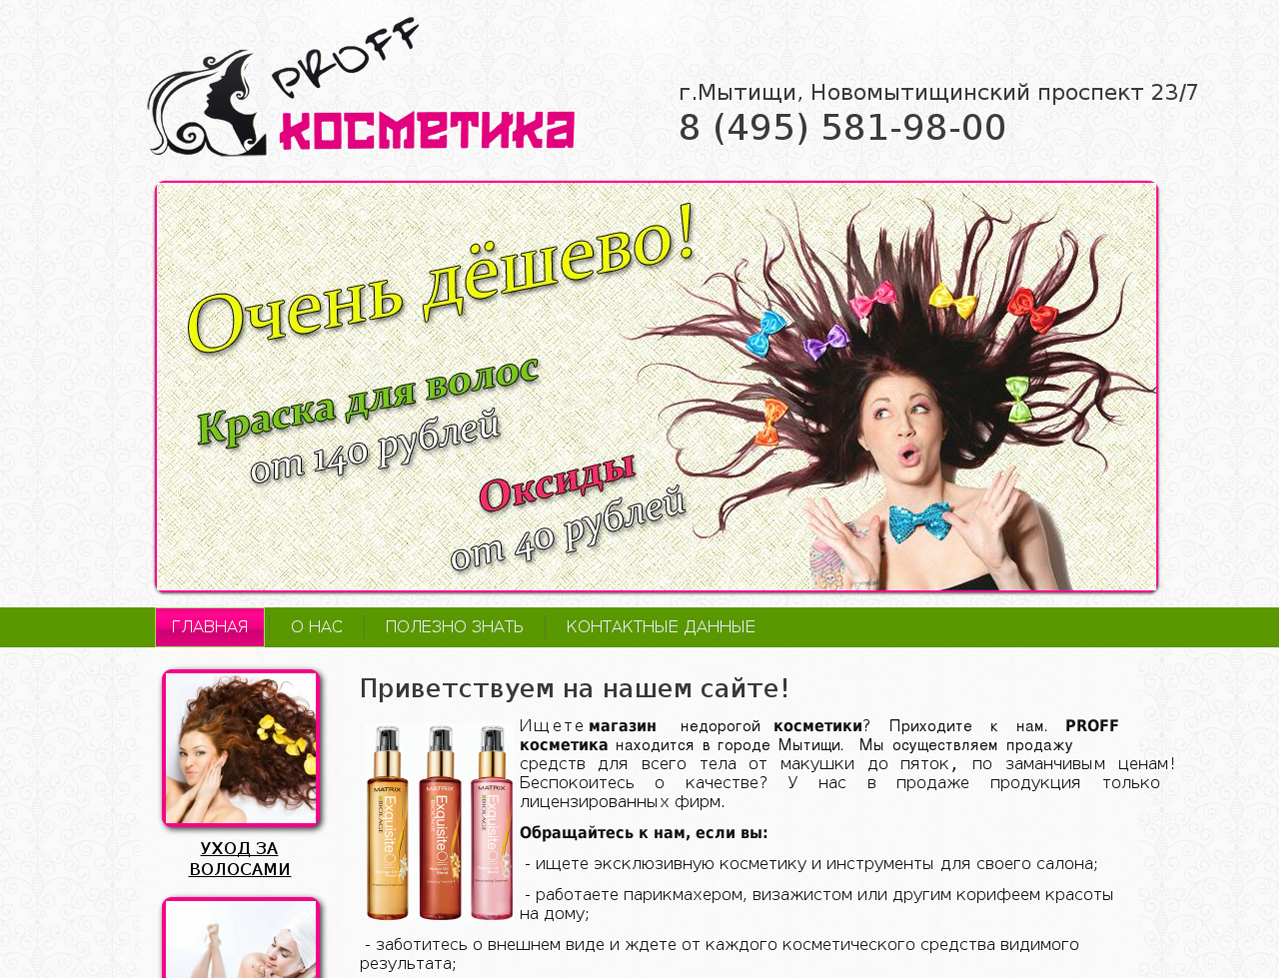 proffkosmet.ru - разработка сайта, дизайн, домен, хостинг